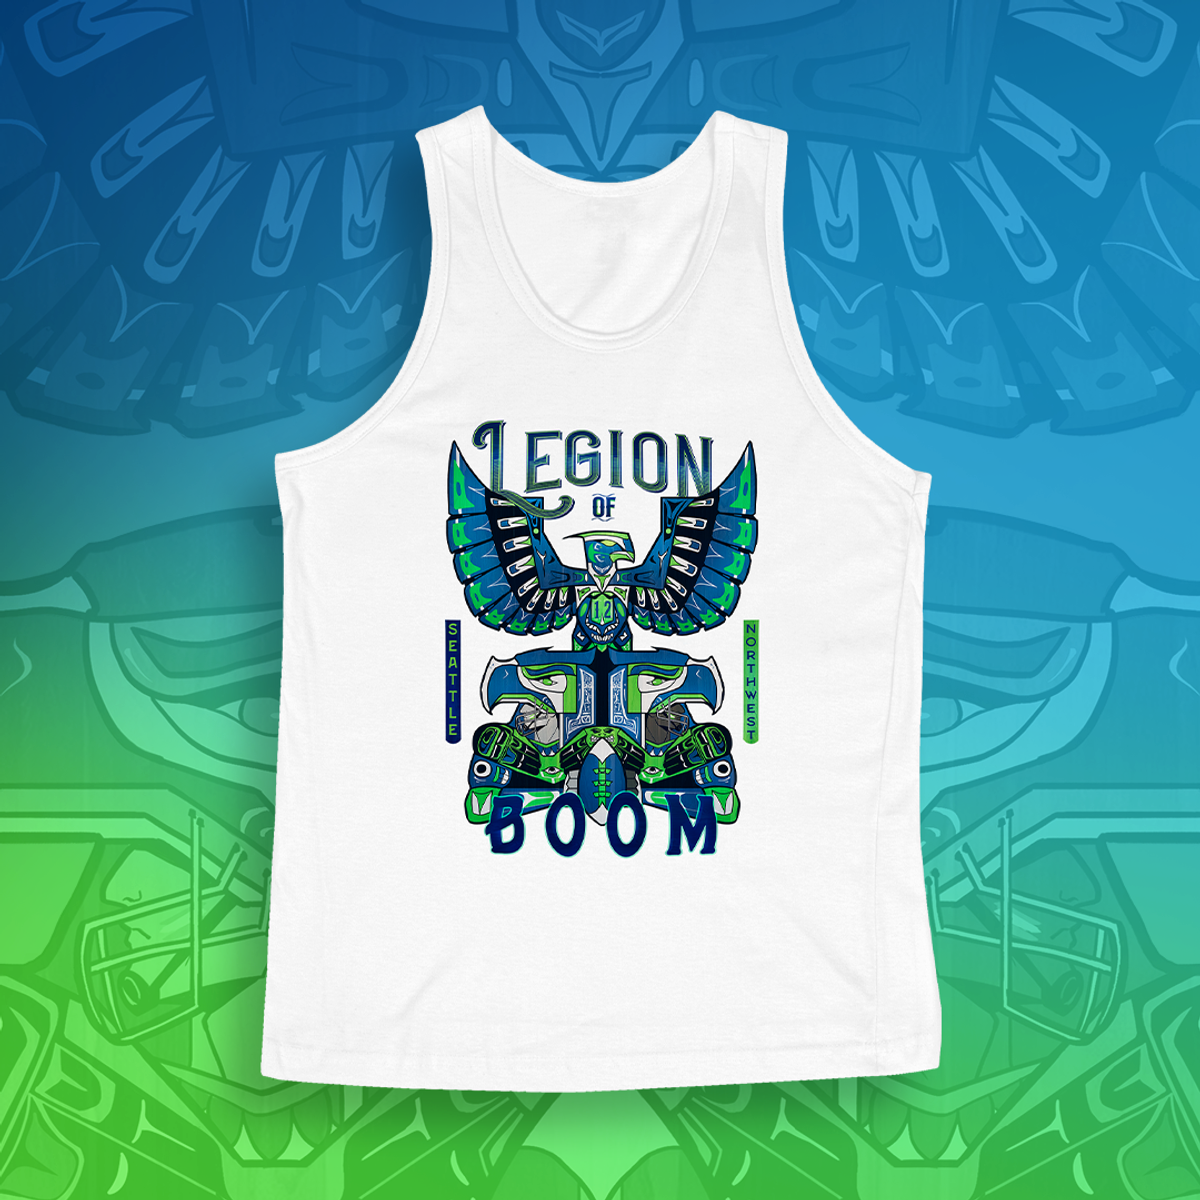 Nome do produto: Seattle - Totem Legion of Boom (regata)